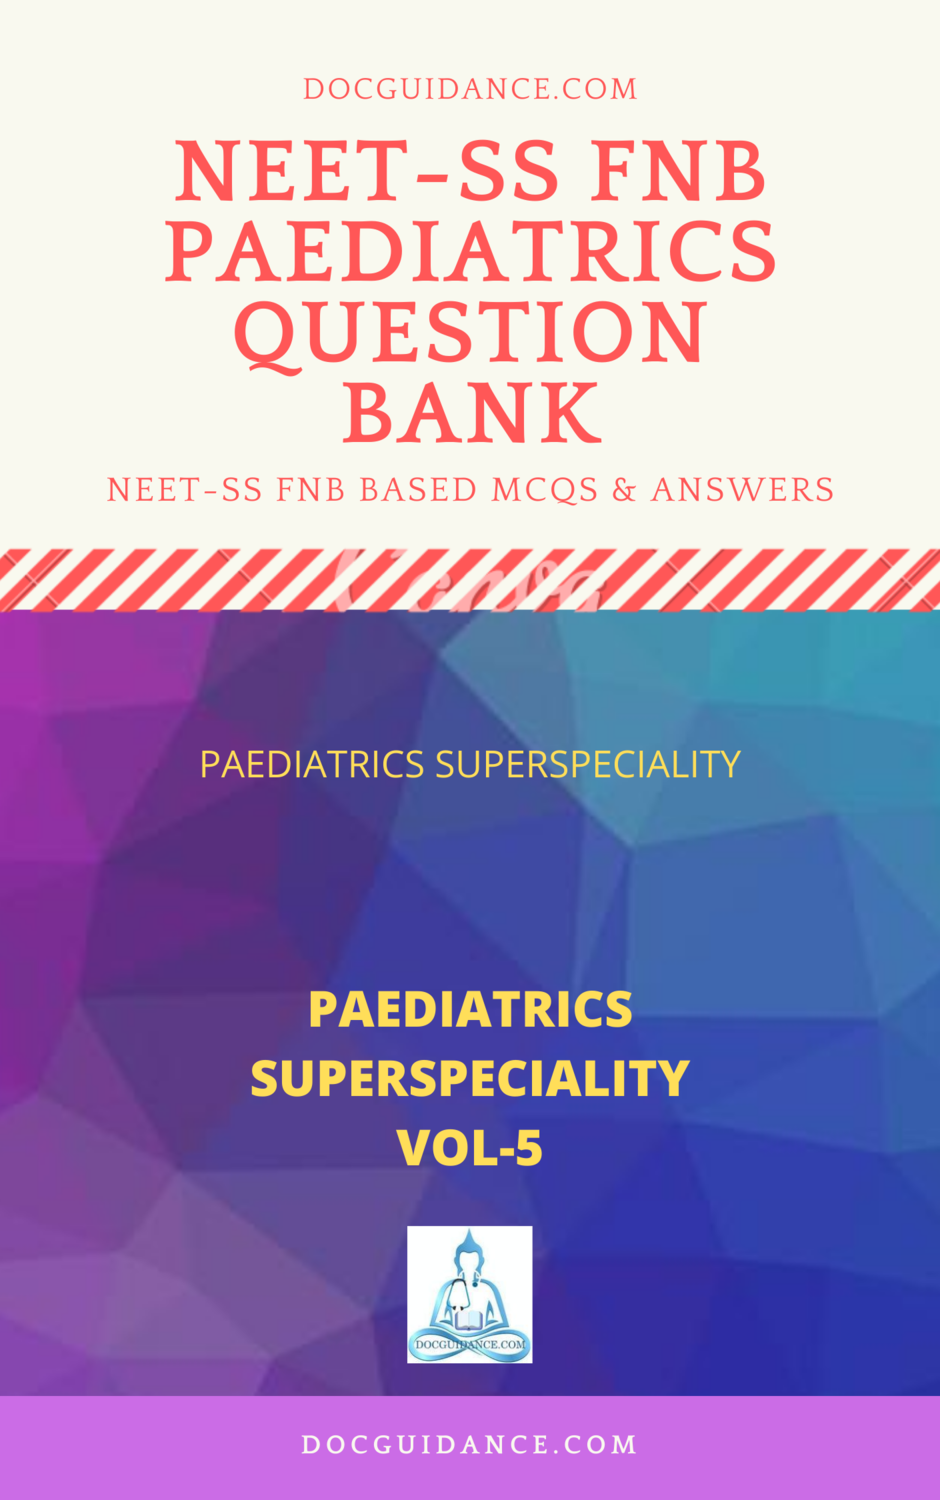 Paediatrics NEET-SS Question Bank vol-5